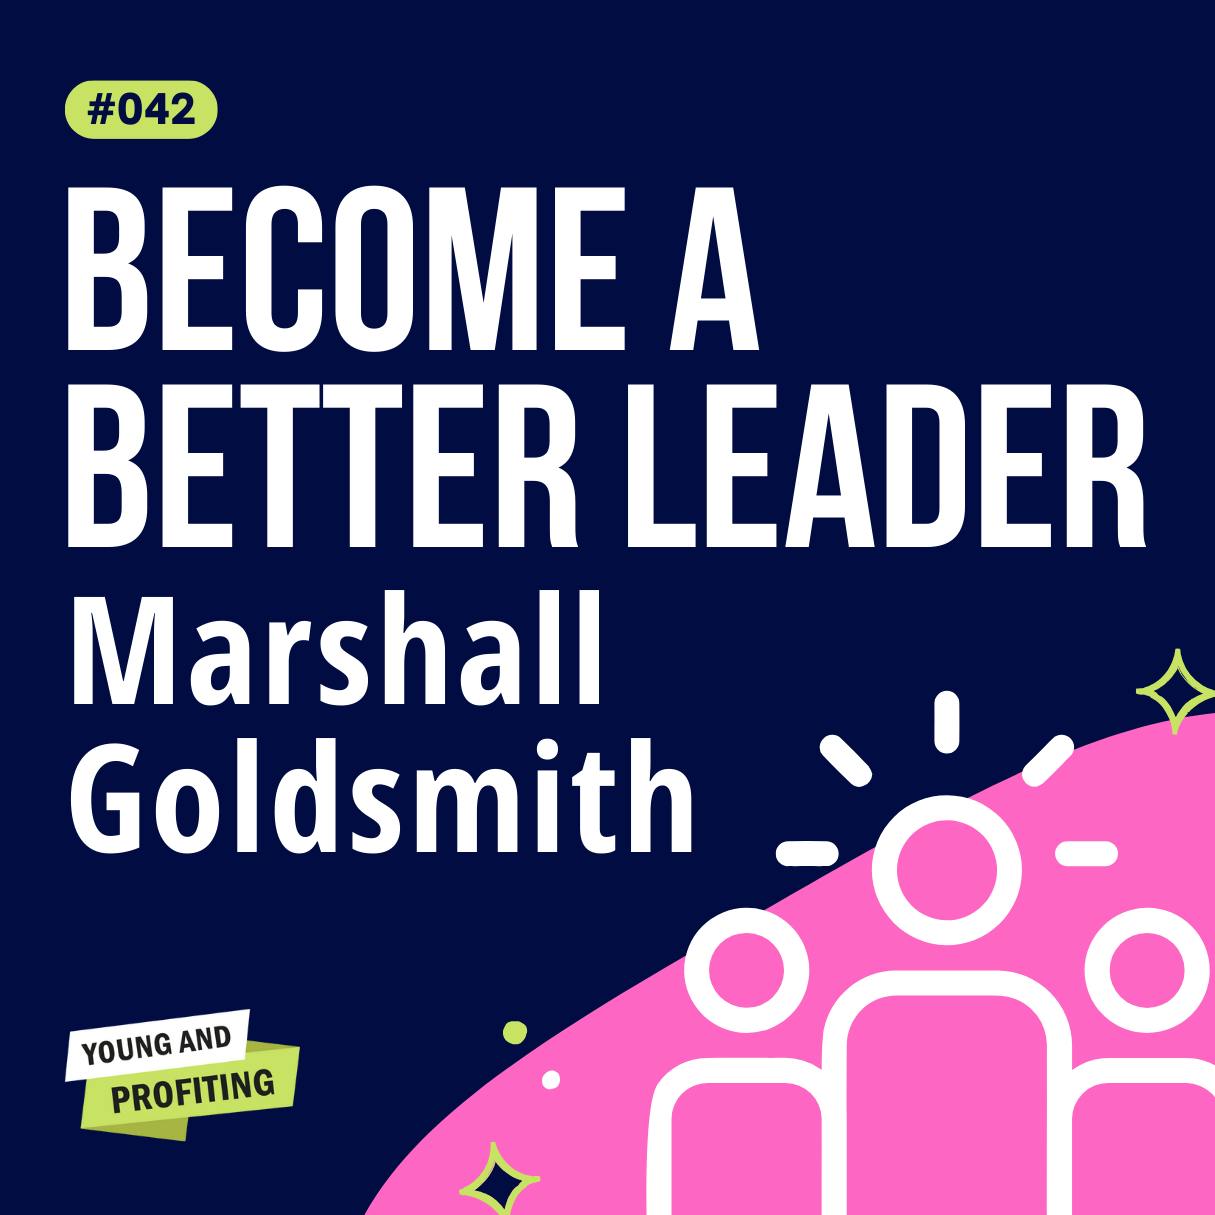 YAPClassic: Marshall Goldsmith, #1 Business Executive Coach Shares His Secrets for Training CEOs and Entrepreneurs by Hala Taha | YAP Media Network